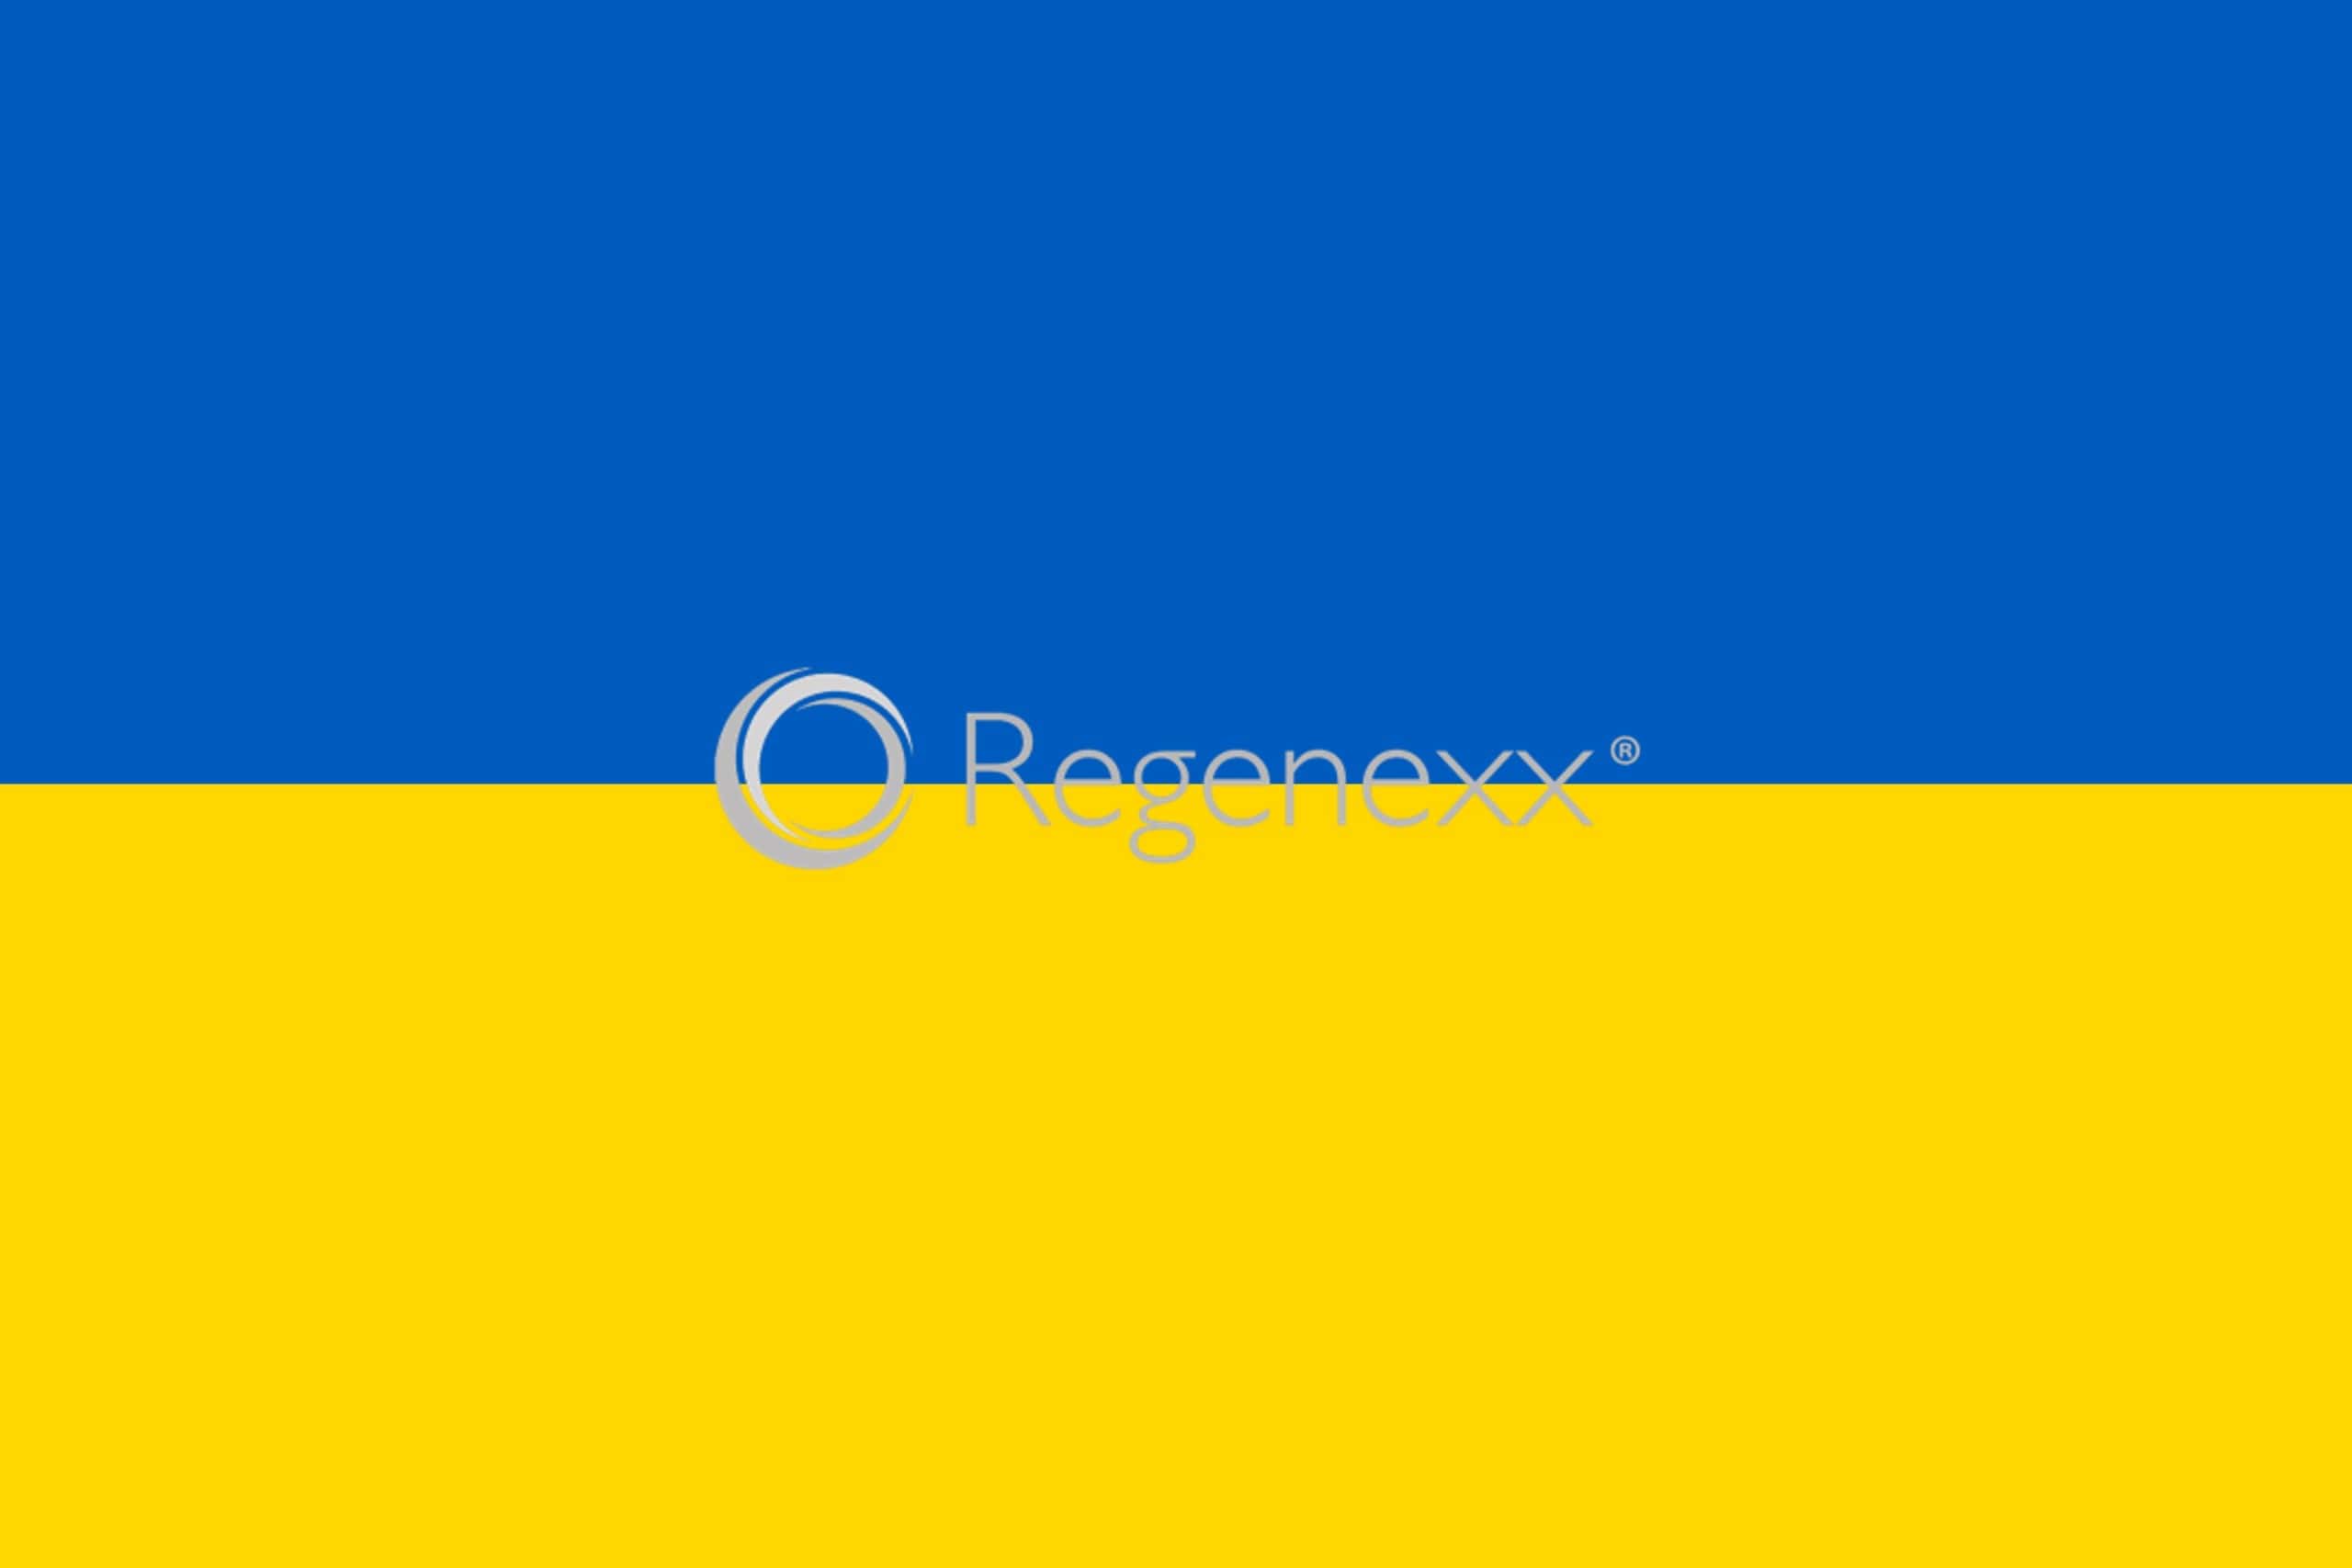 Standing with Ukraine - Regenexx